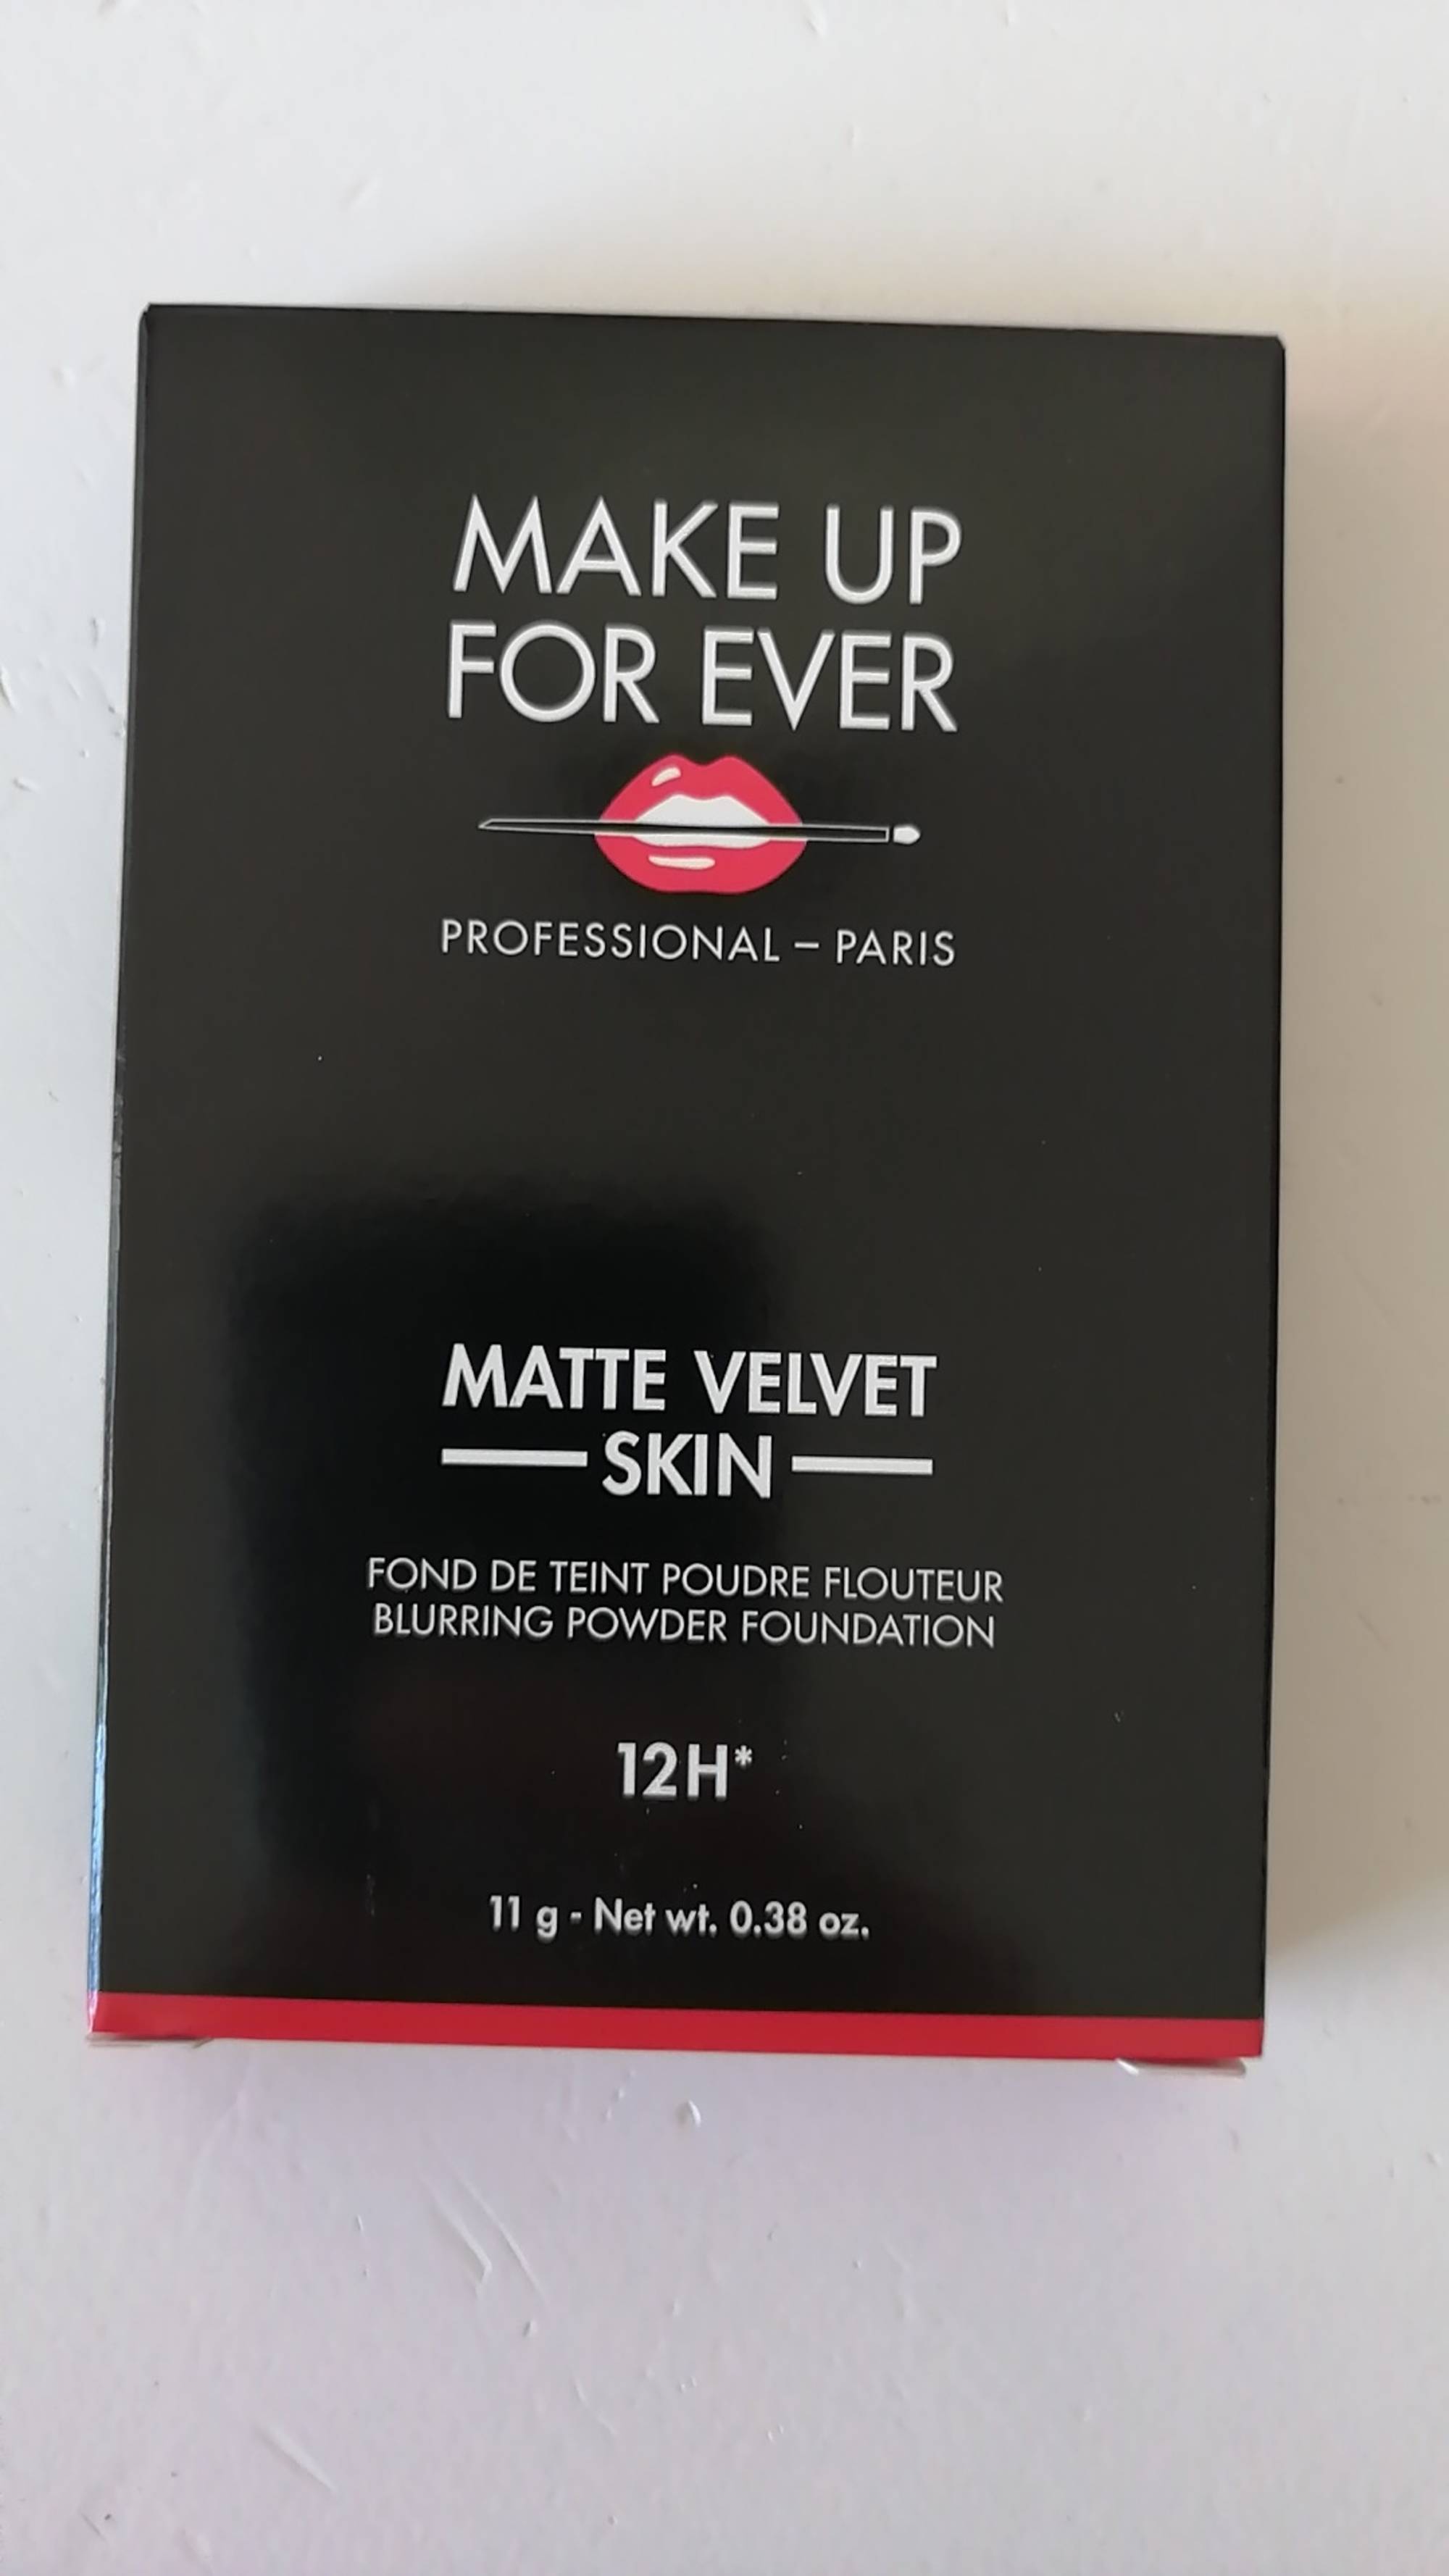 MAKE UP FOR EVER - Matte velvet skin - Fond de teint poudre flouteur